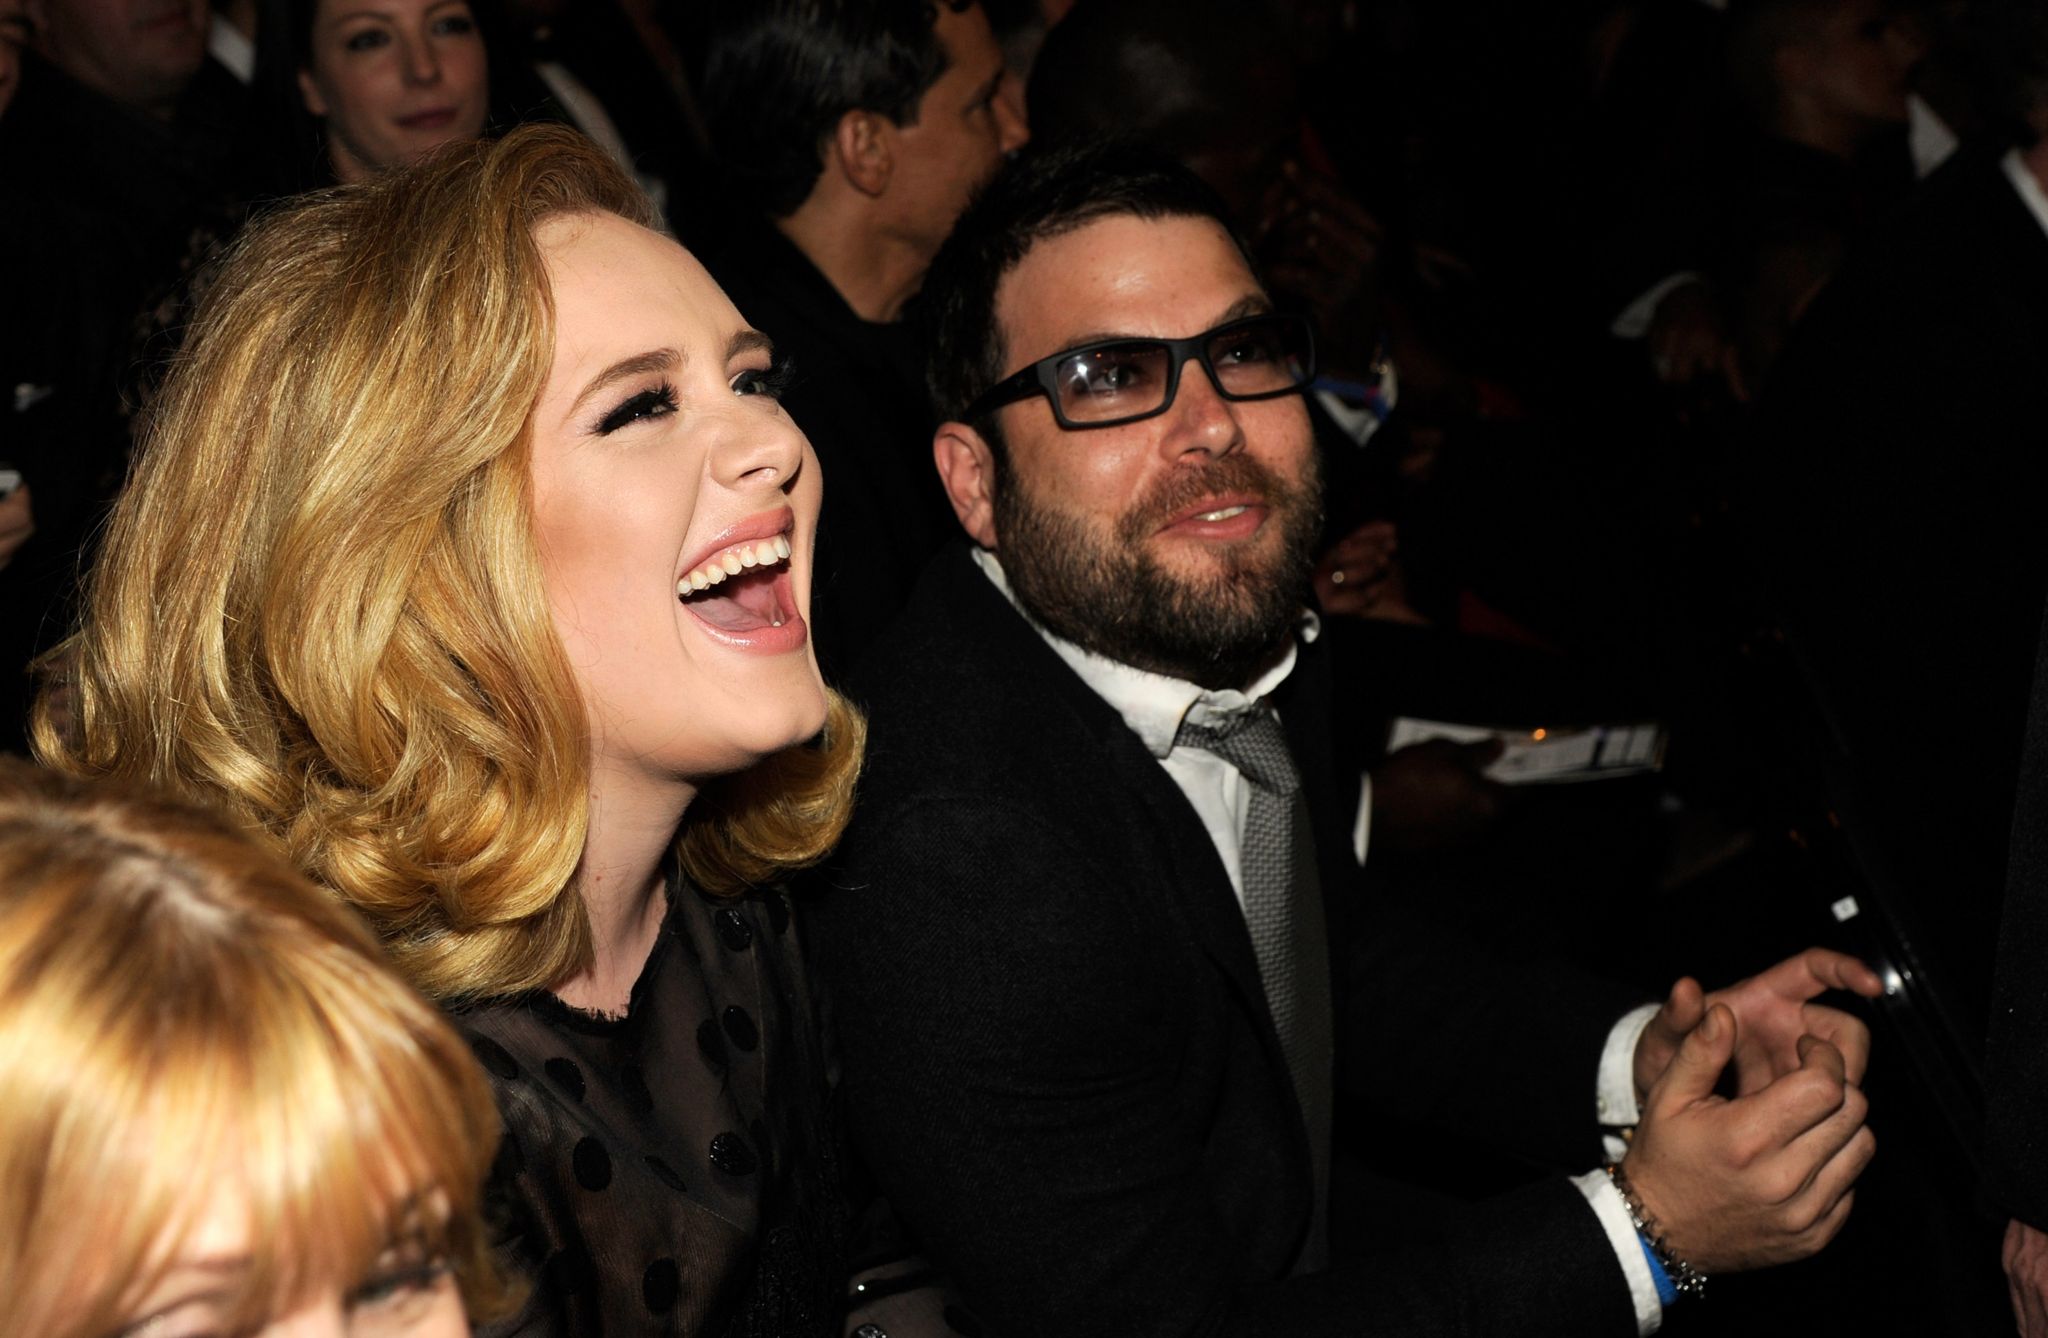 Adele and Simon Konecki at the Grammy Awards in 2013